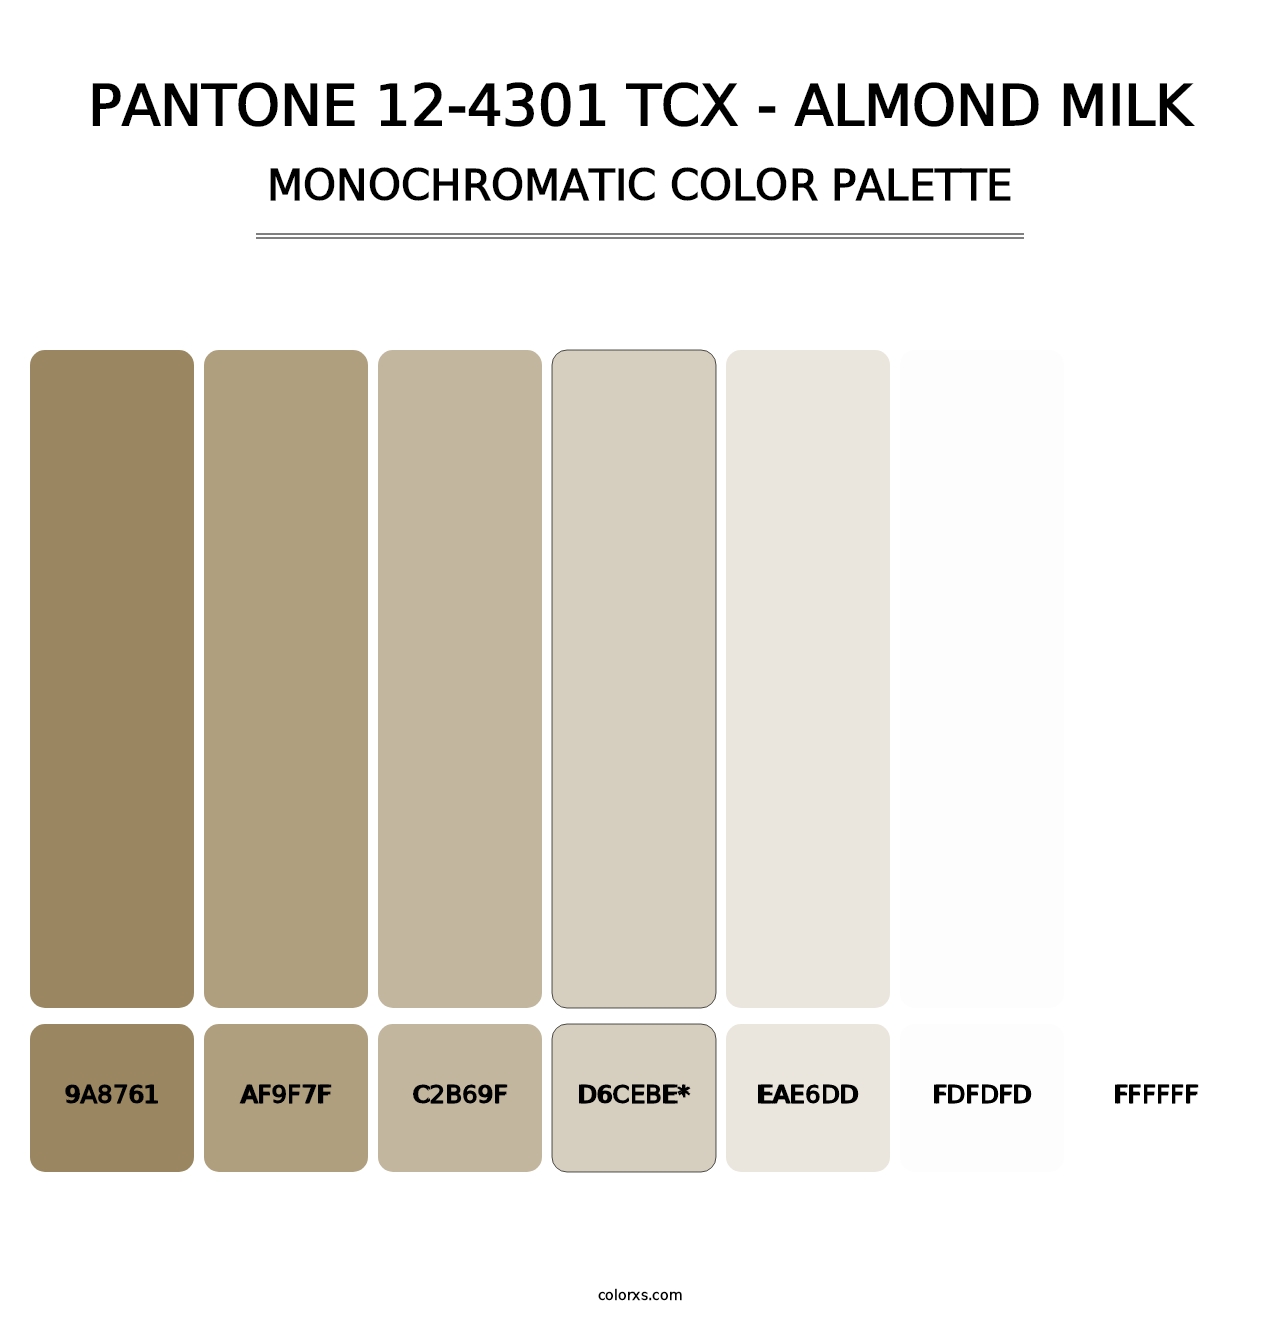 PANTONE 12-4301 TCX - Almond Milk - Monochromatic Color Palette